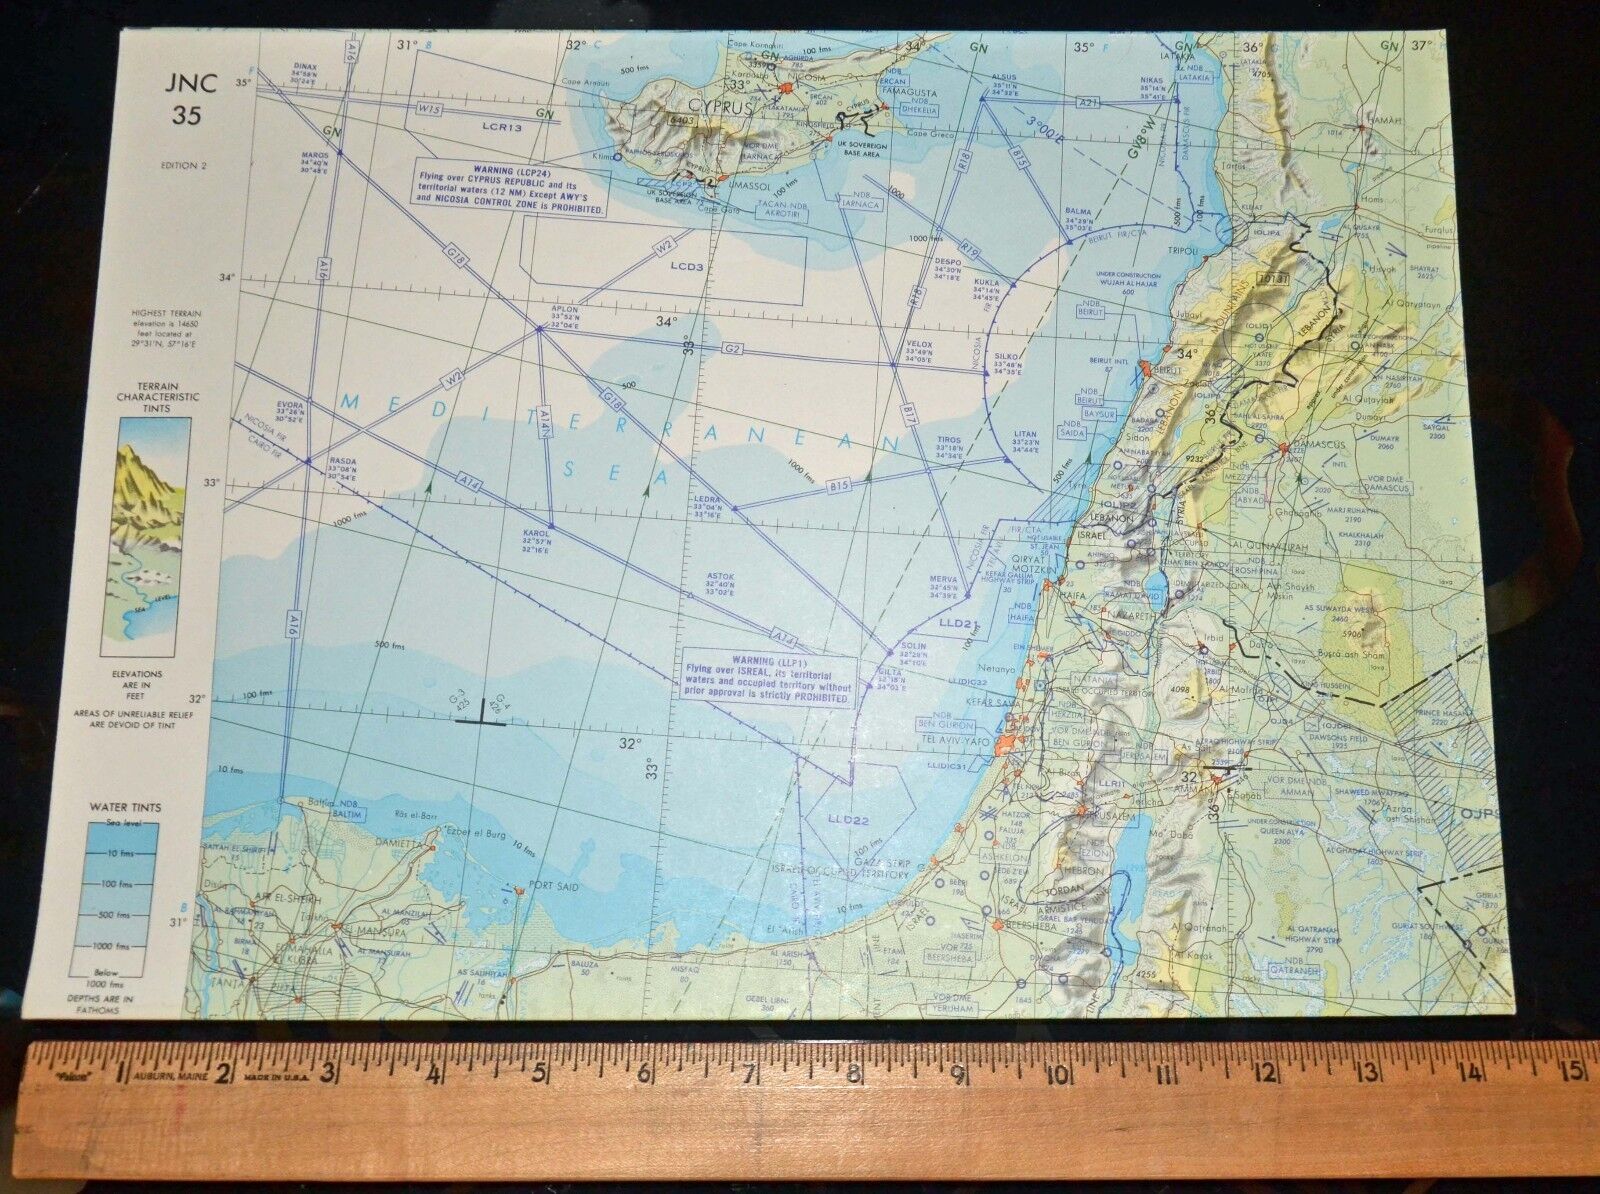 Vintage JNC 35 Edition 2 Jet Navigation Chart 1980 Aeronautical Map DMAAC 